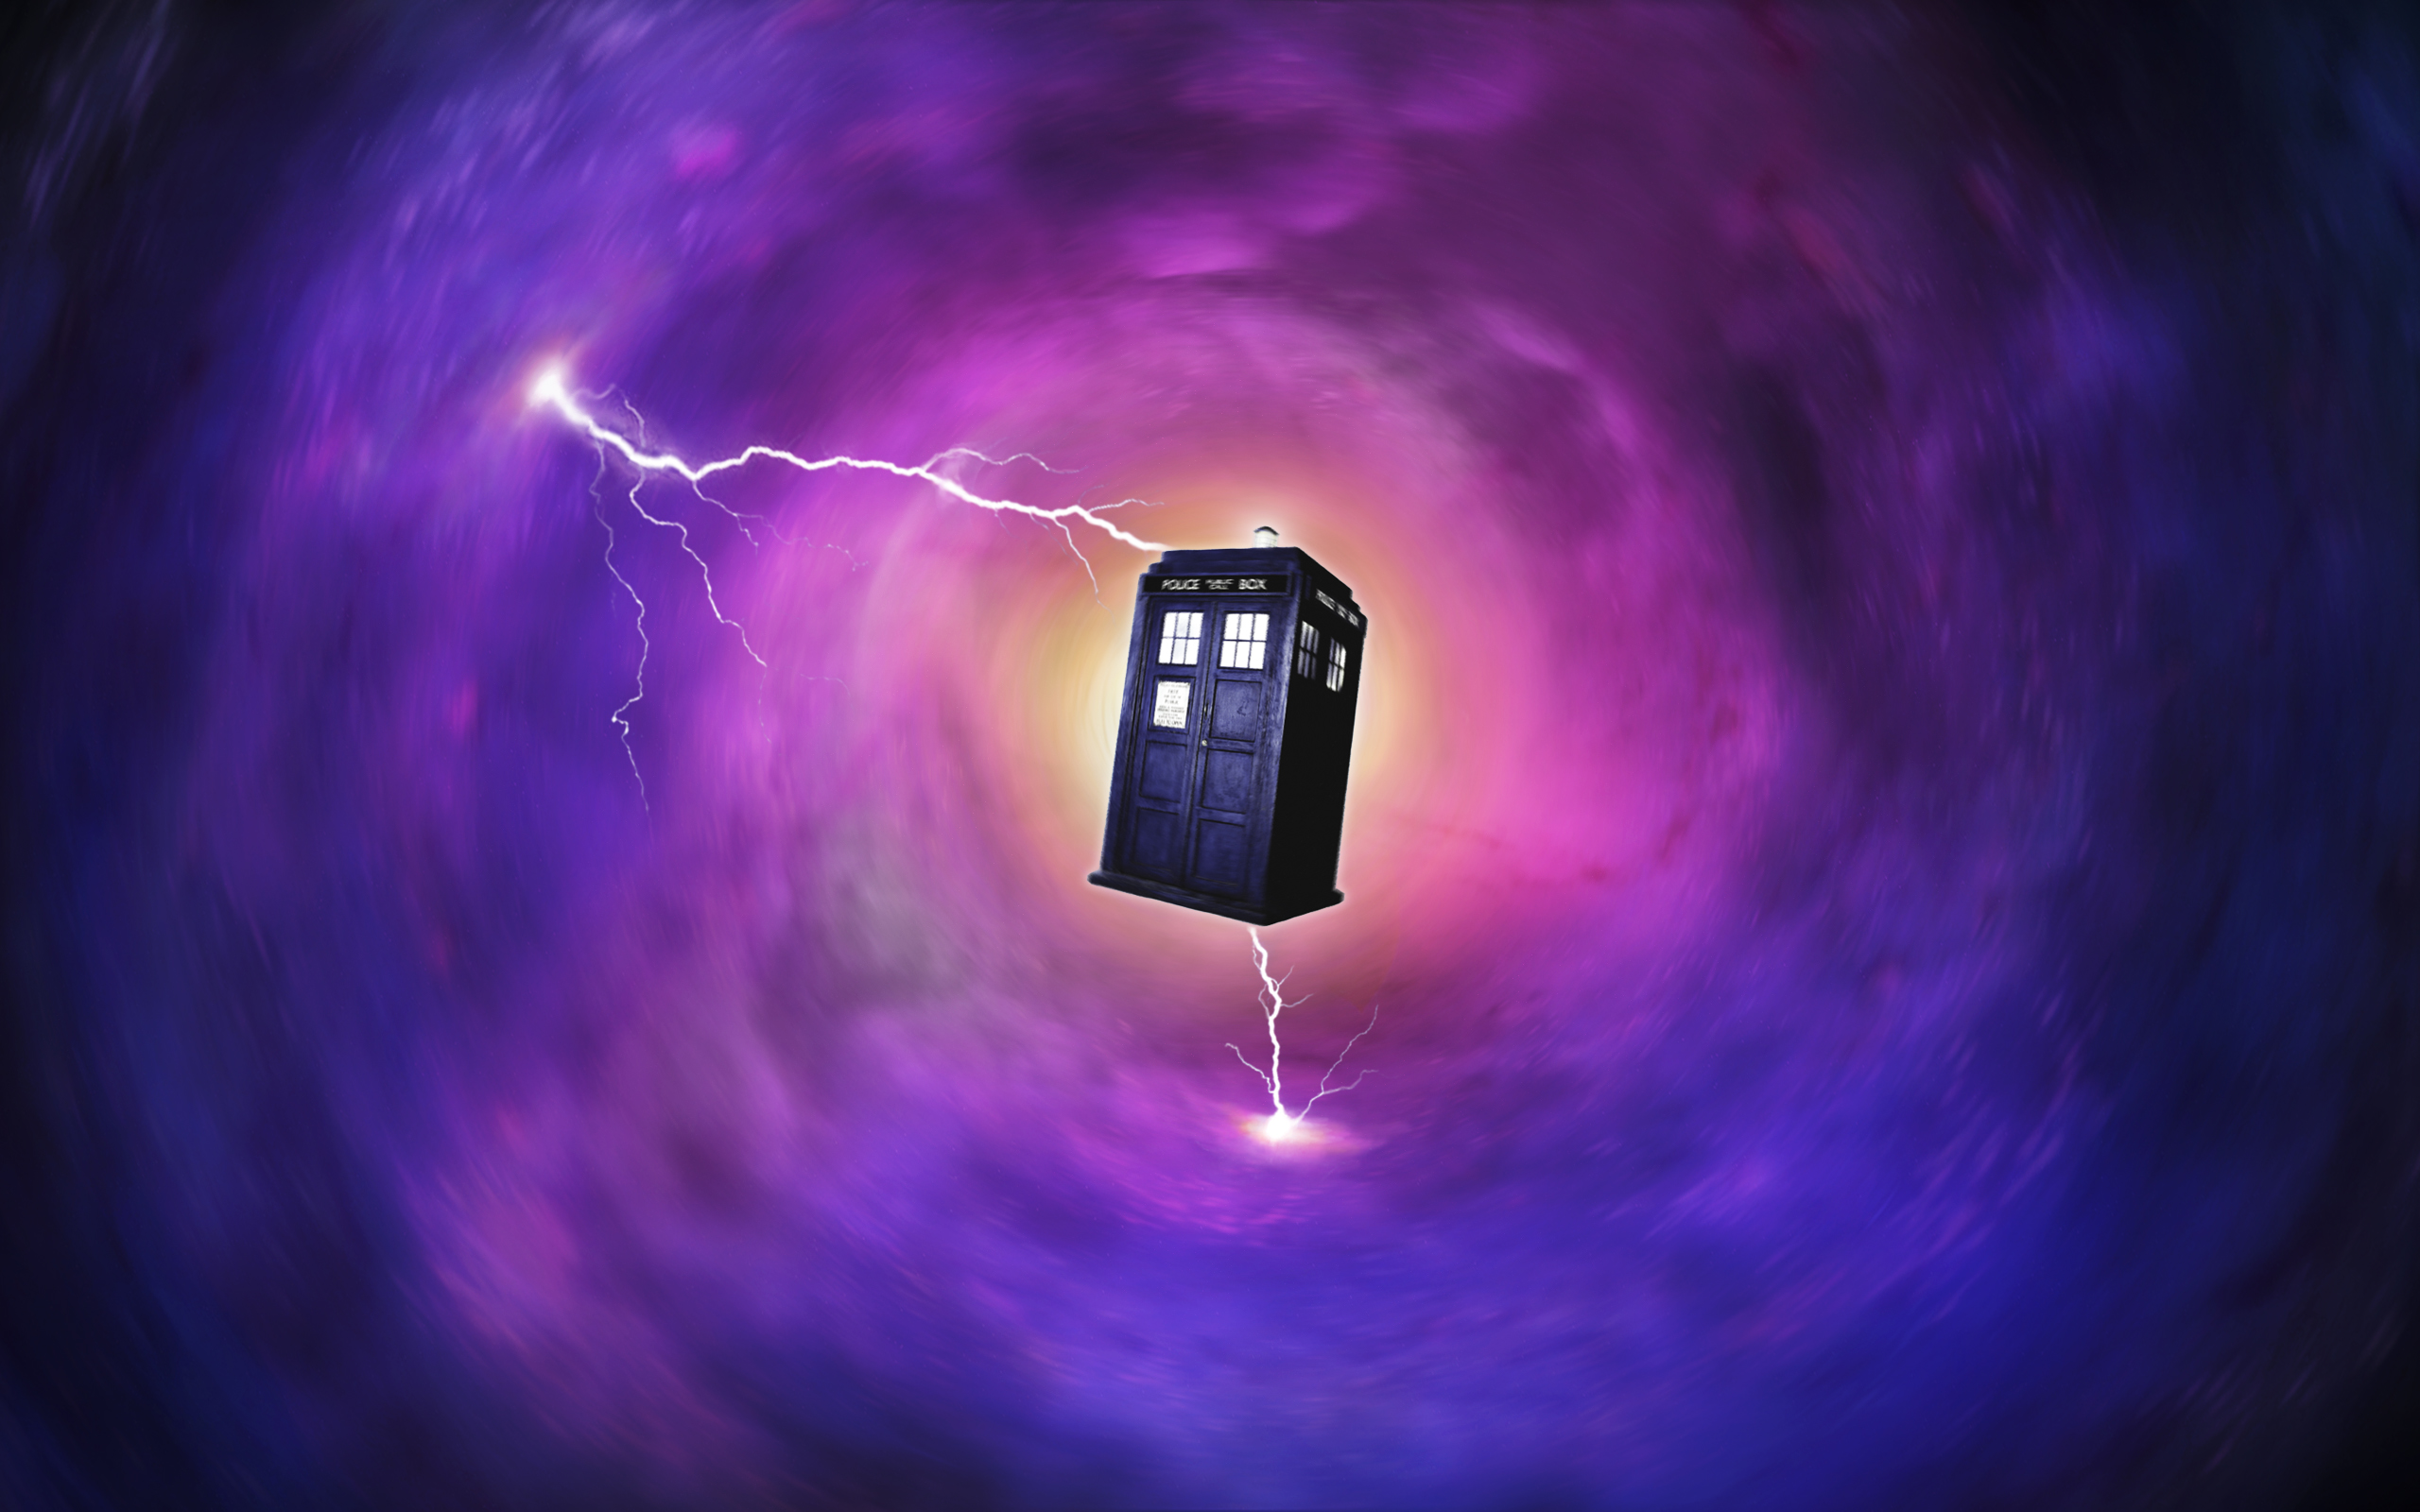 tardis, tv show, doctor who, lightning, telephone booth